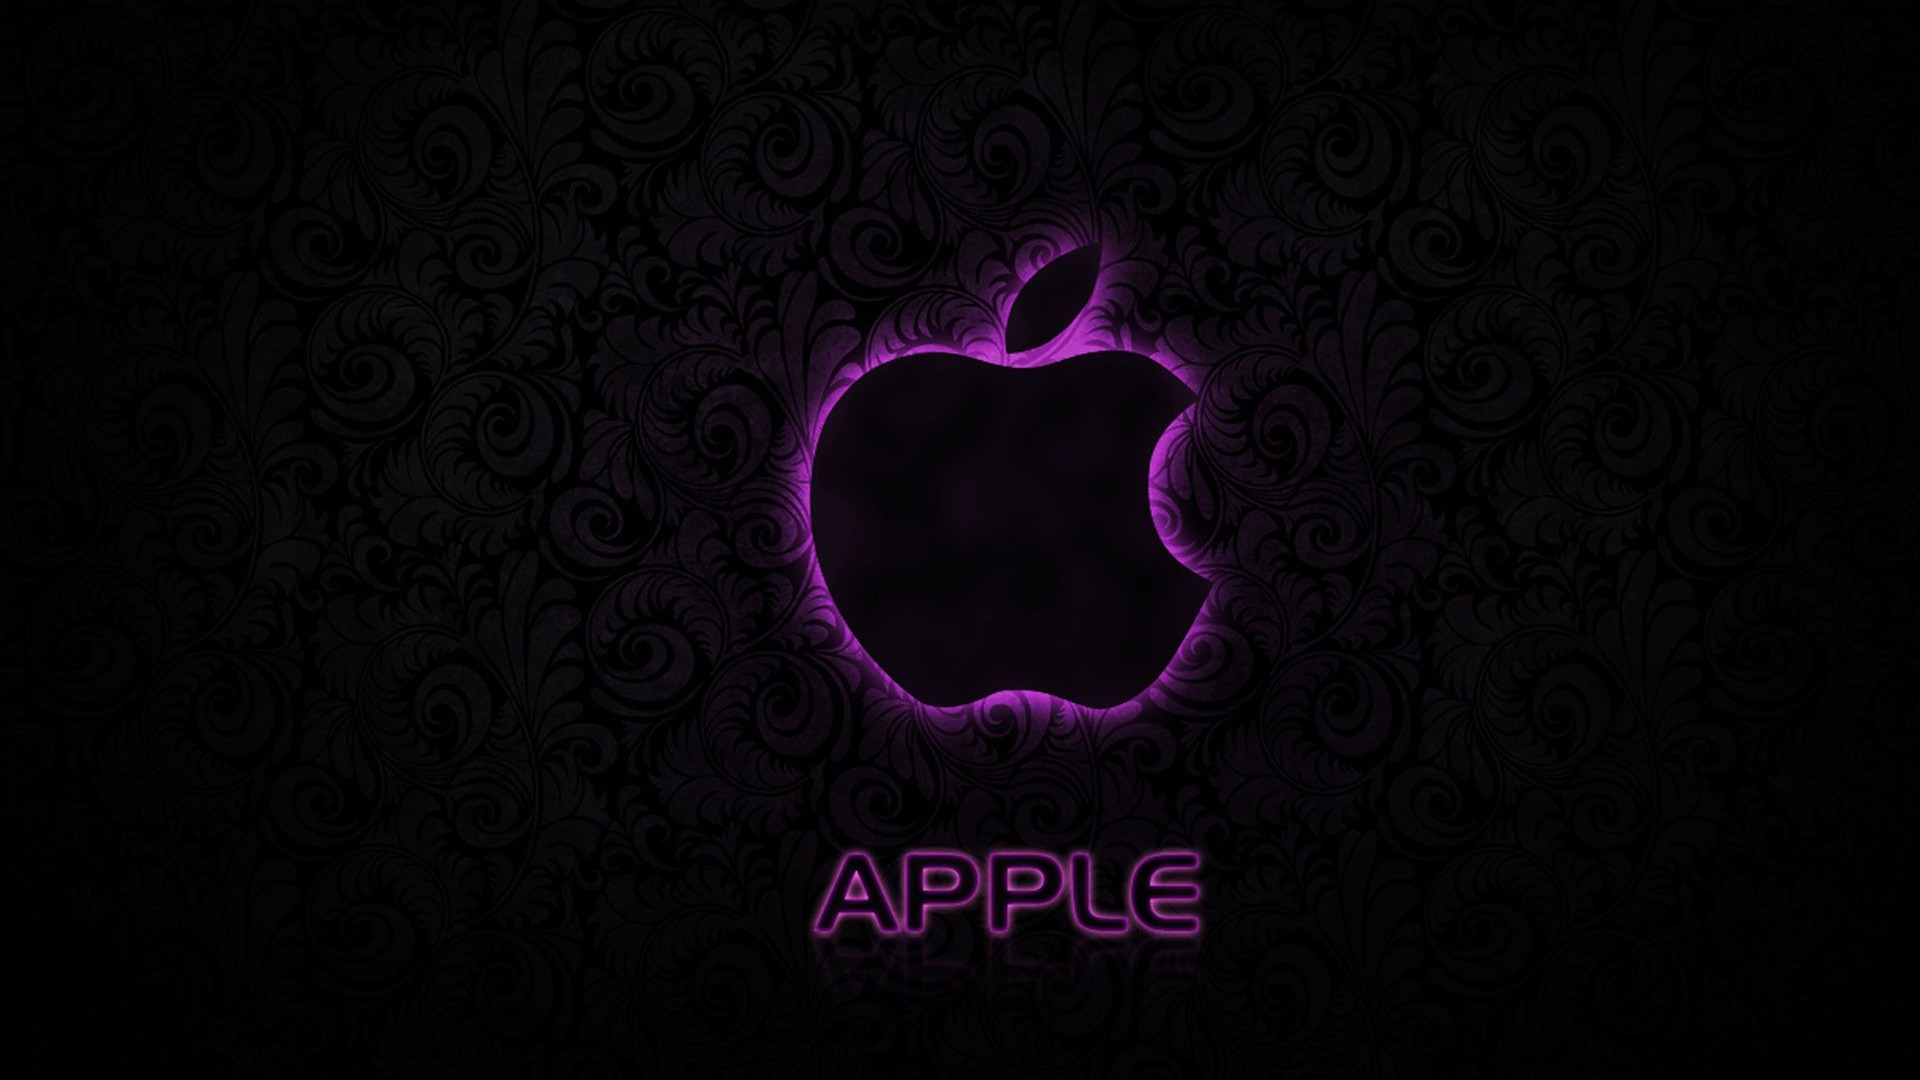 Apple Purple Desktop Wallpaper Amazing Wallpaperz